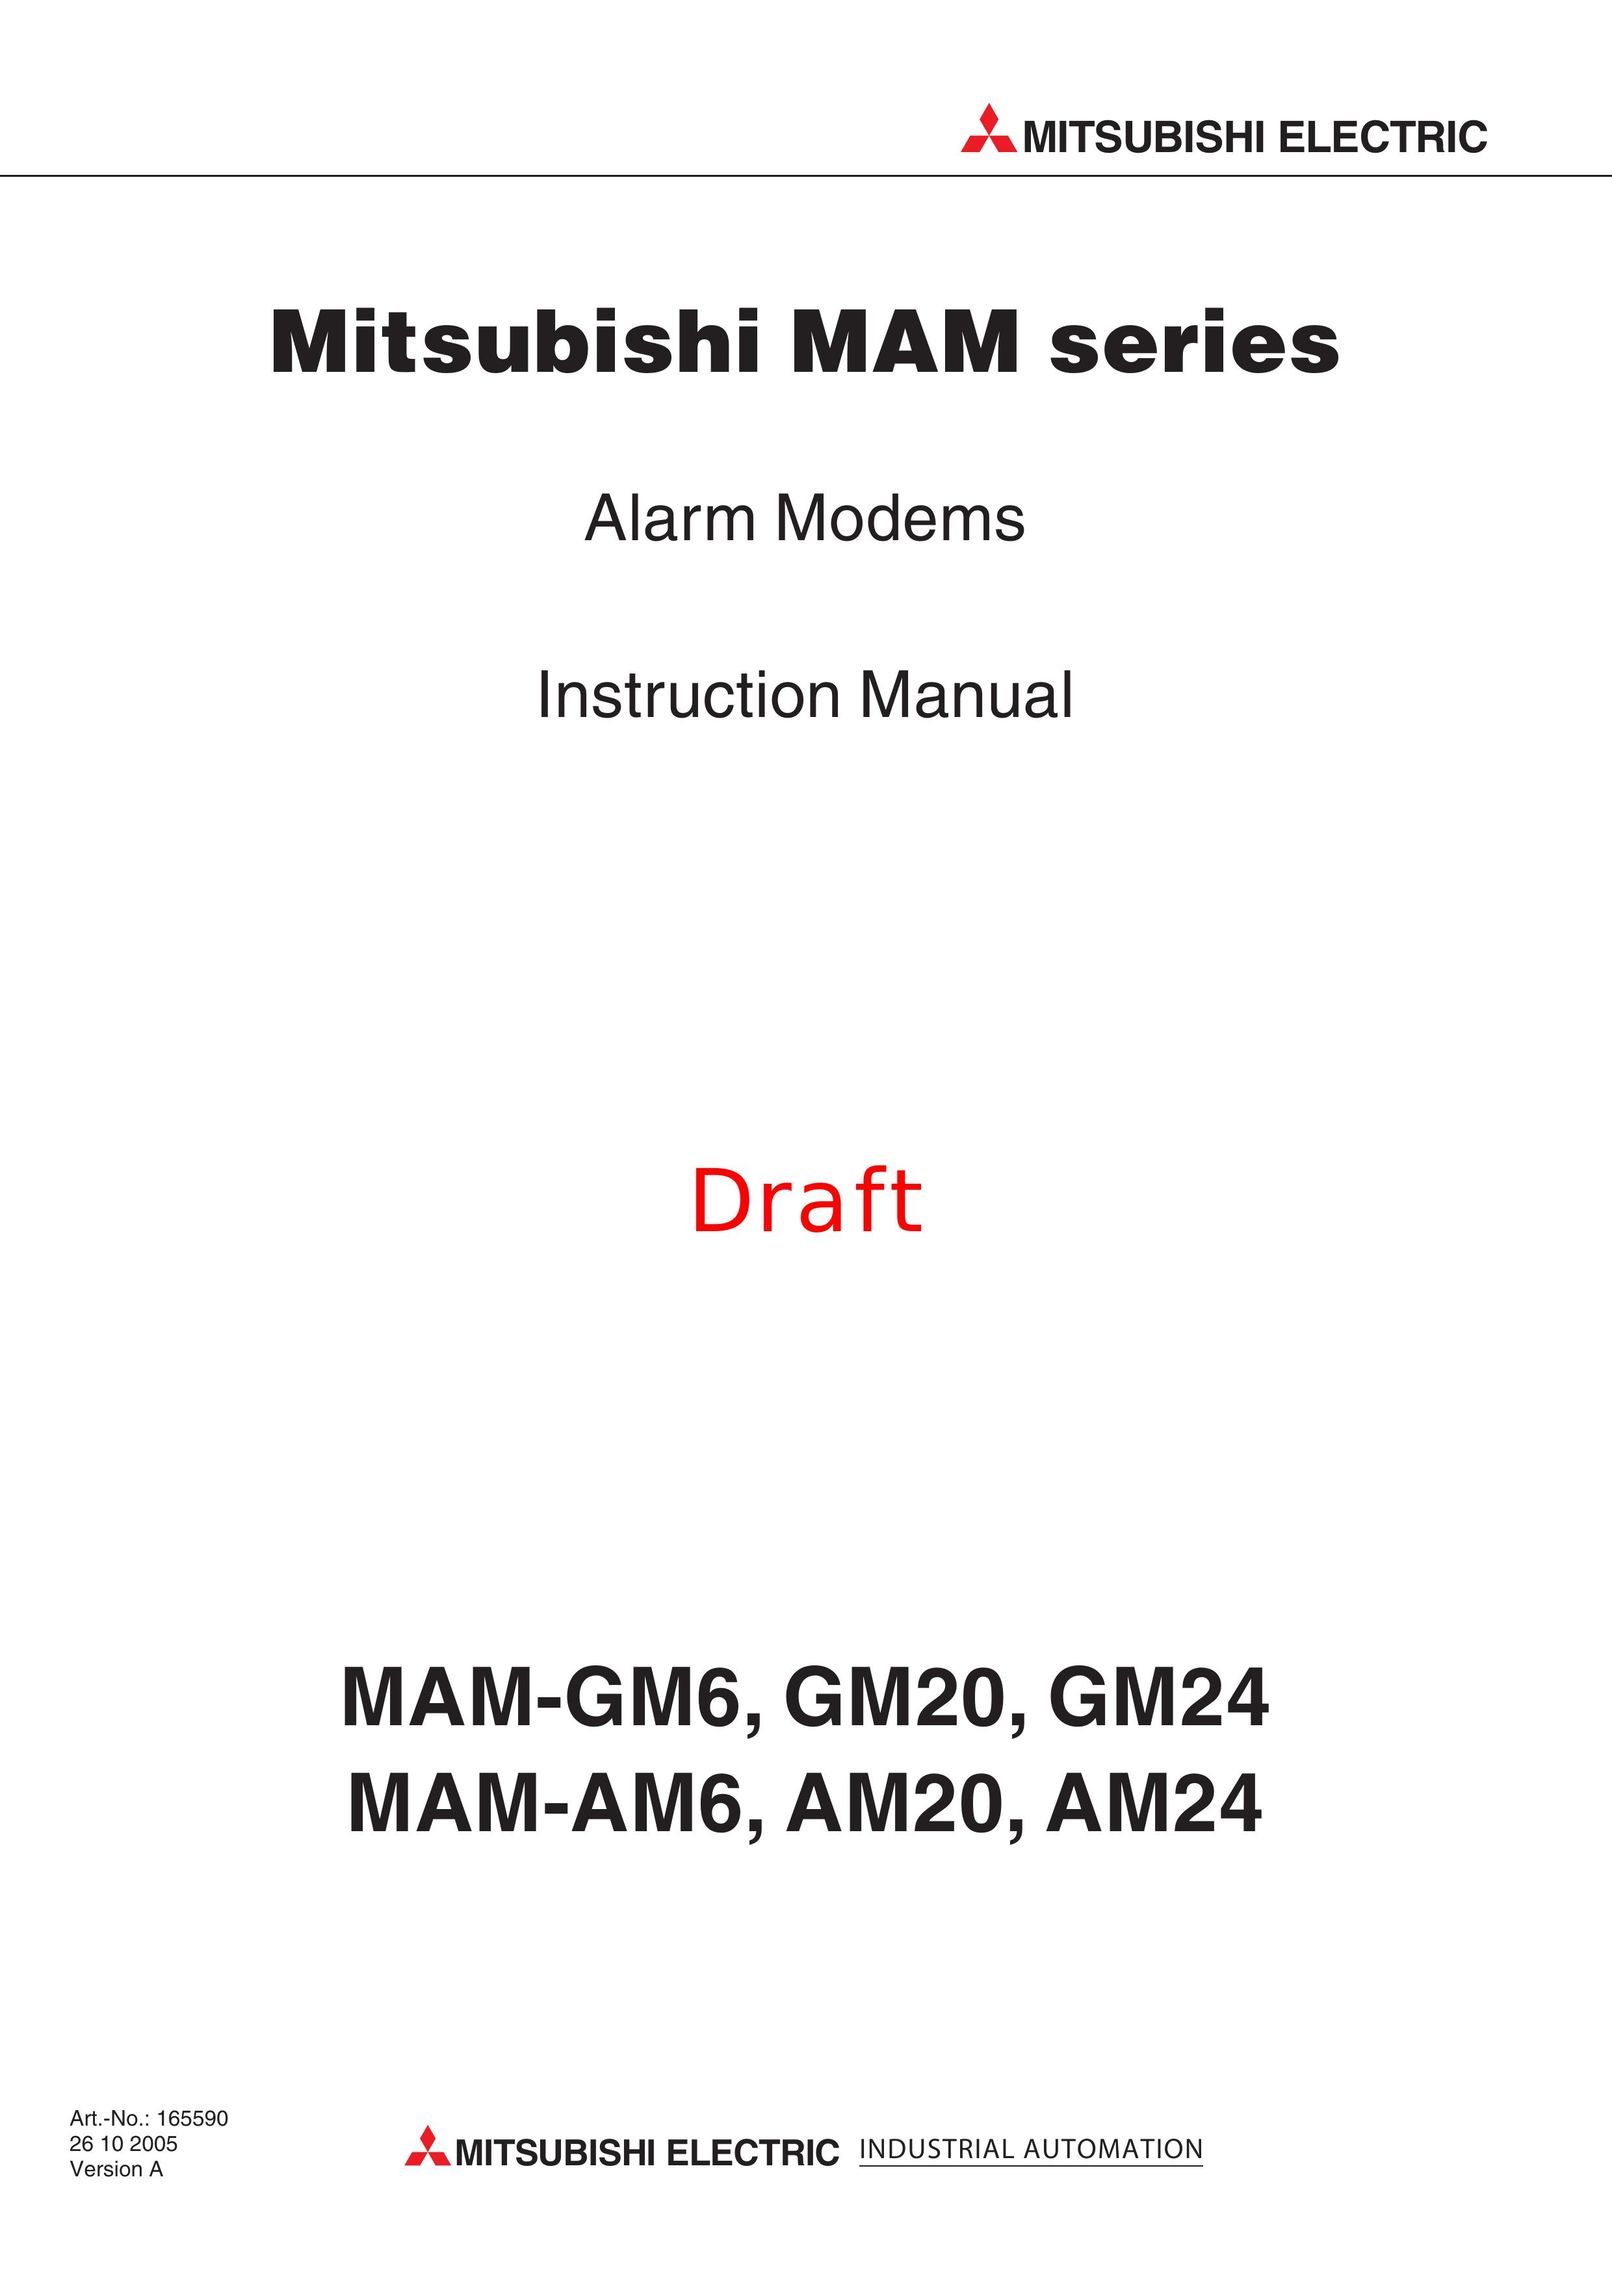 Mitsubishi Electronics MAM-AM24 Modem User Manual